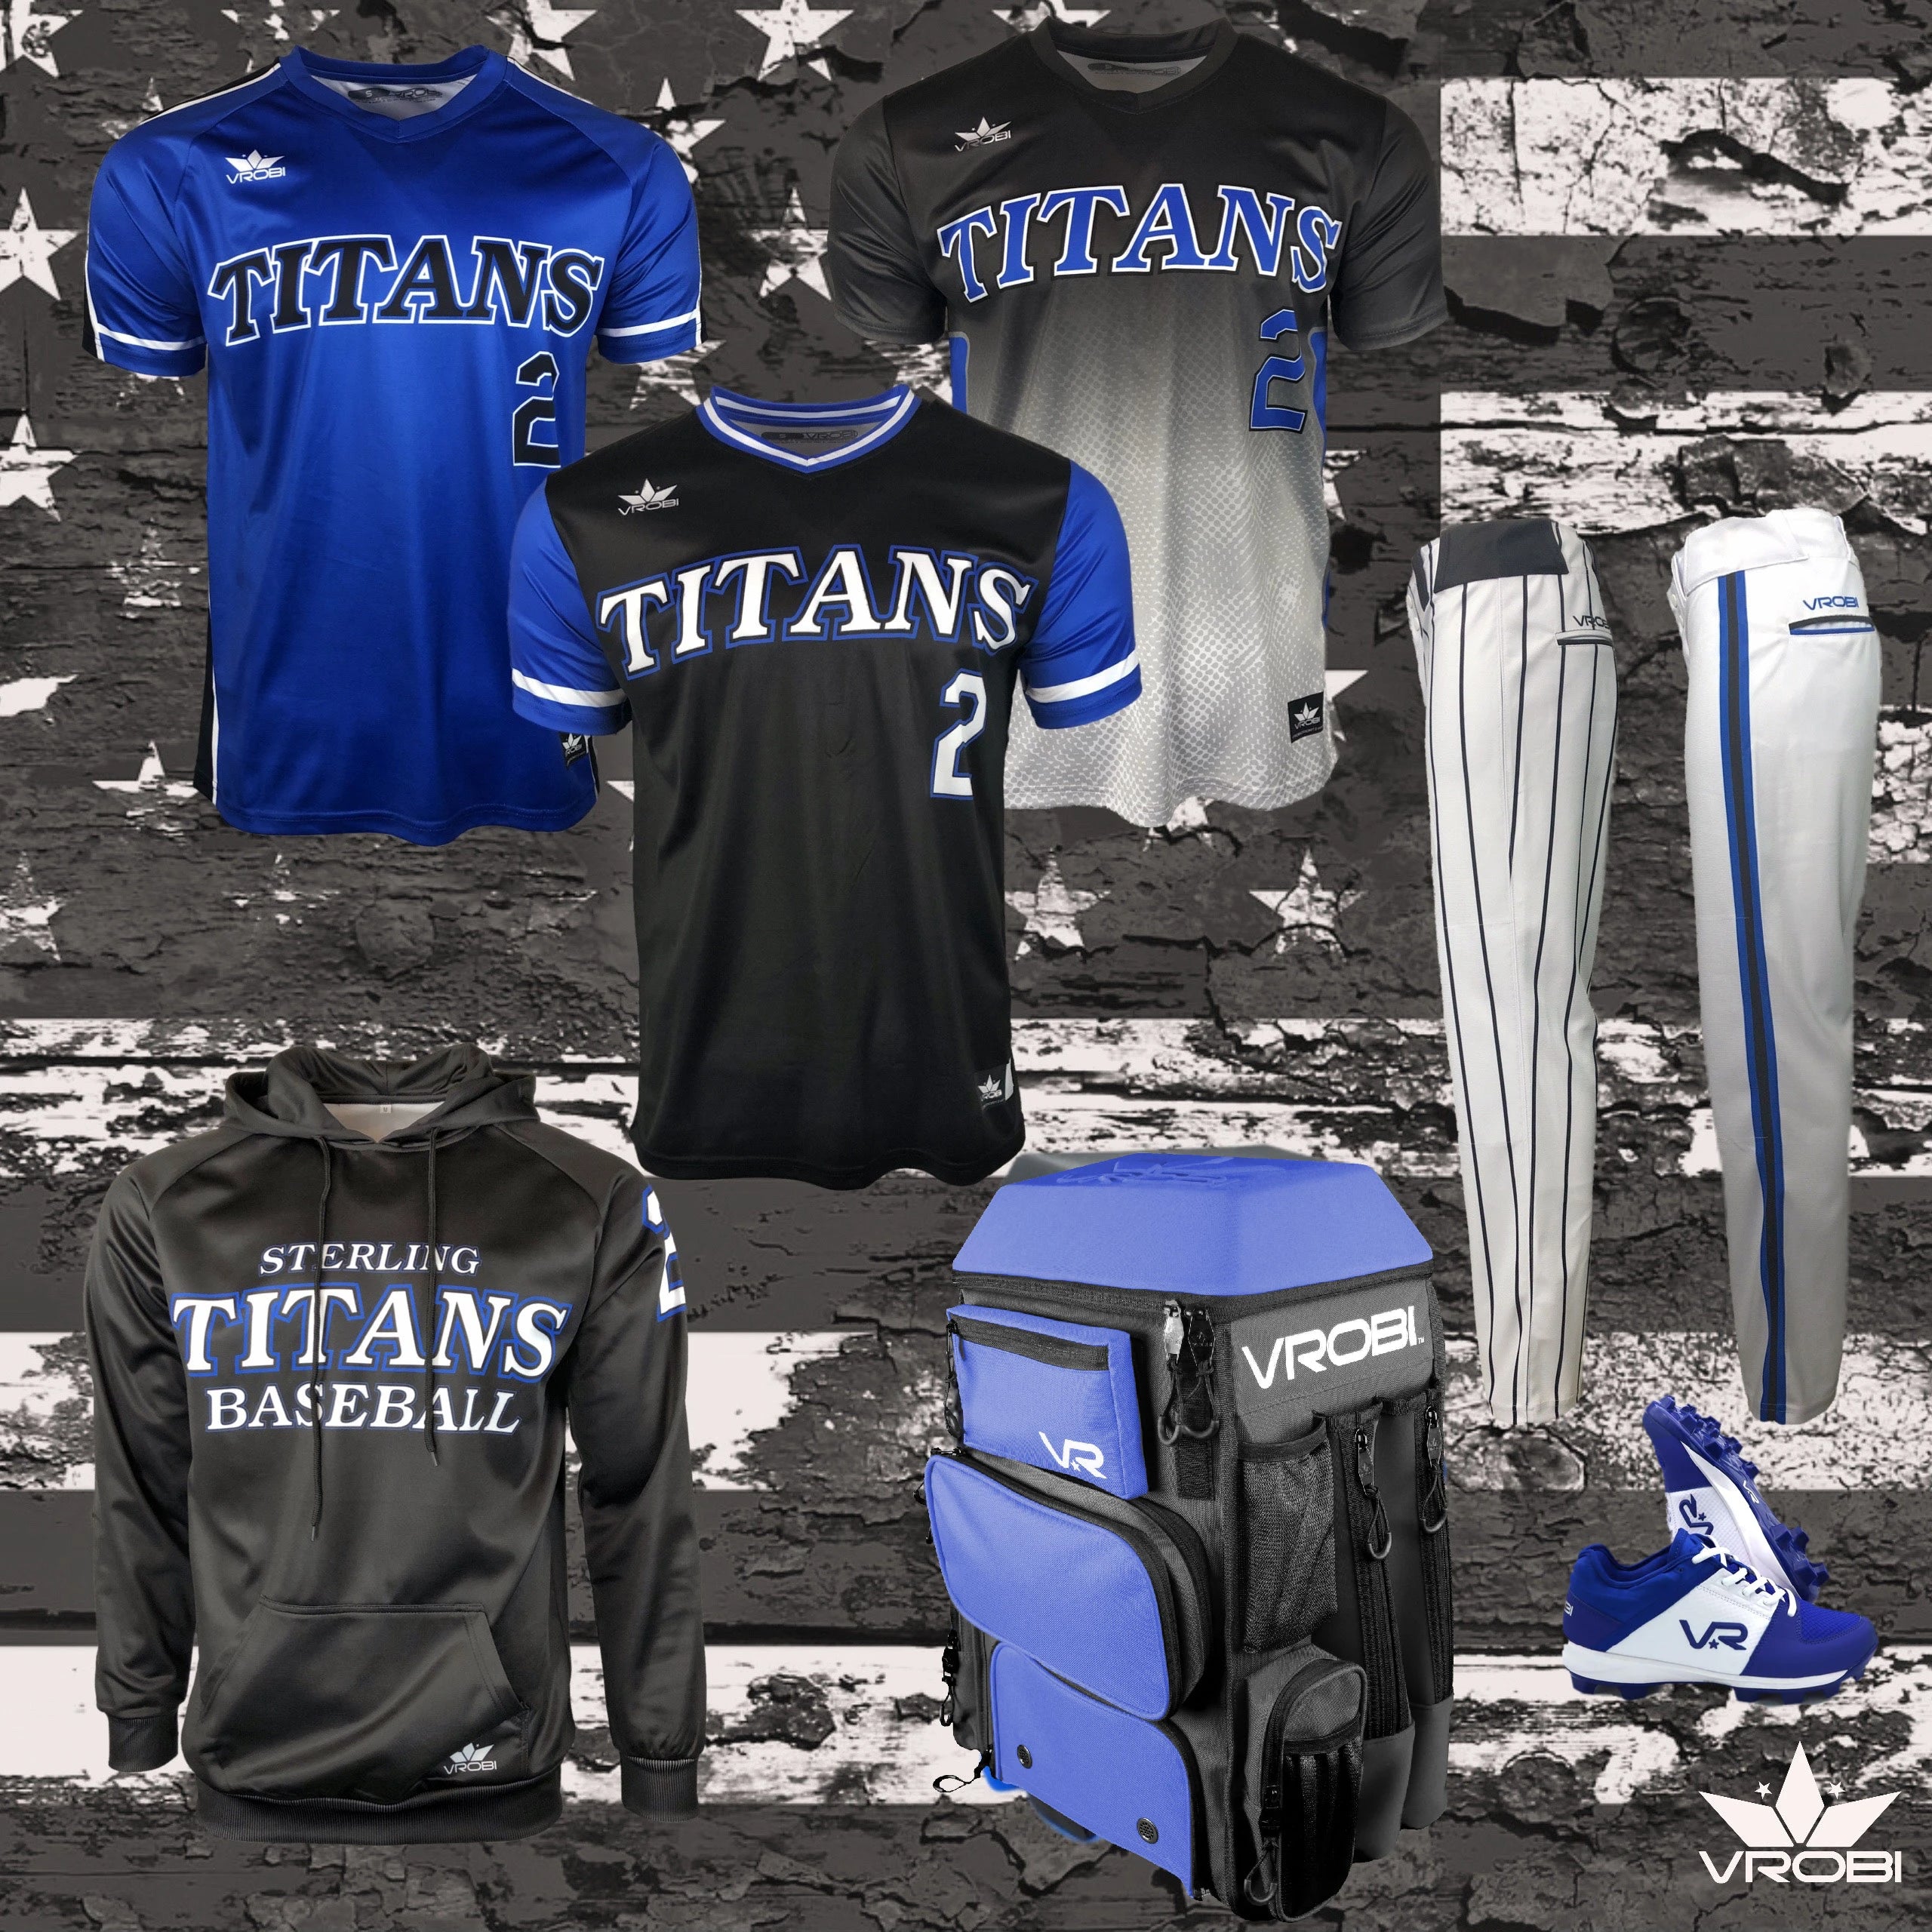  Custom Stitched Baseball Uniforms Boost Team